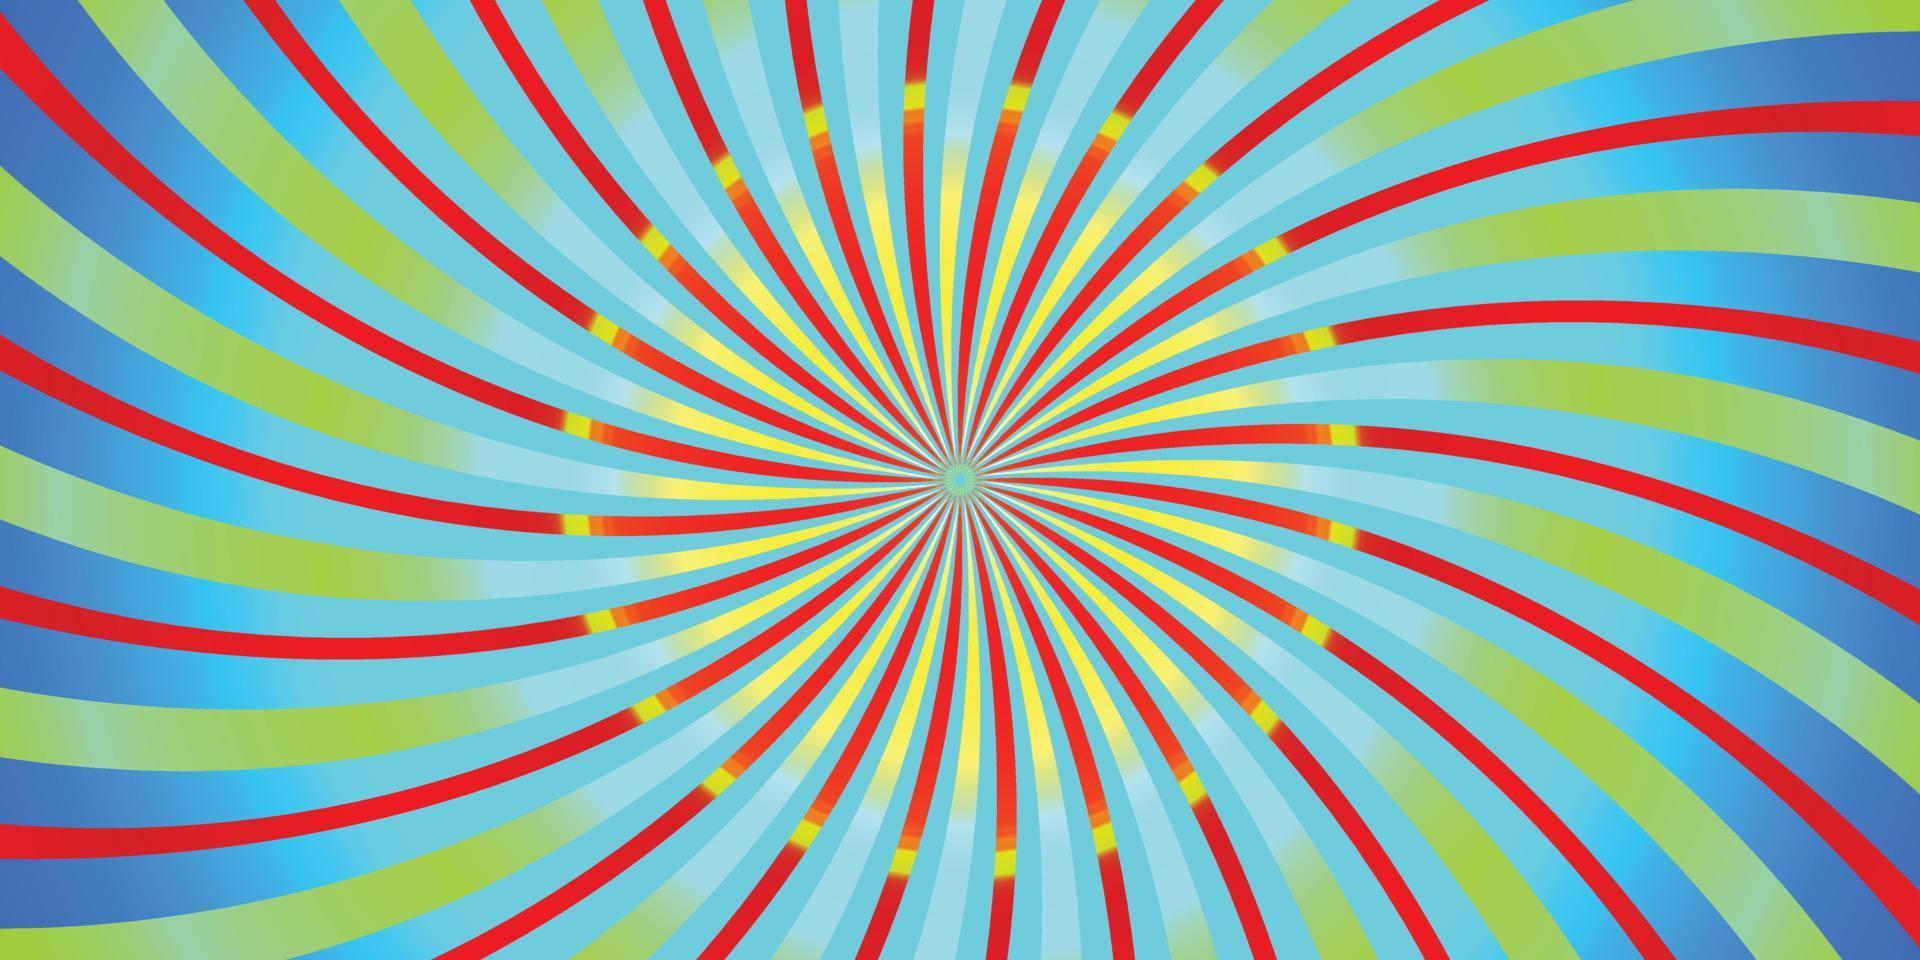 Abstract background sun rays burst sunburst radial starburst explosion festival celebration season wallpaper backdrop pattern vector illustration